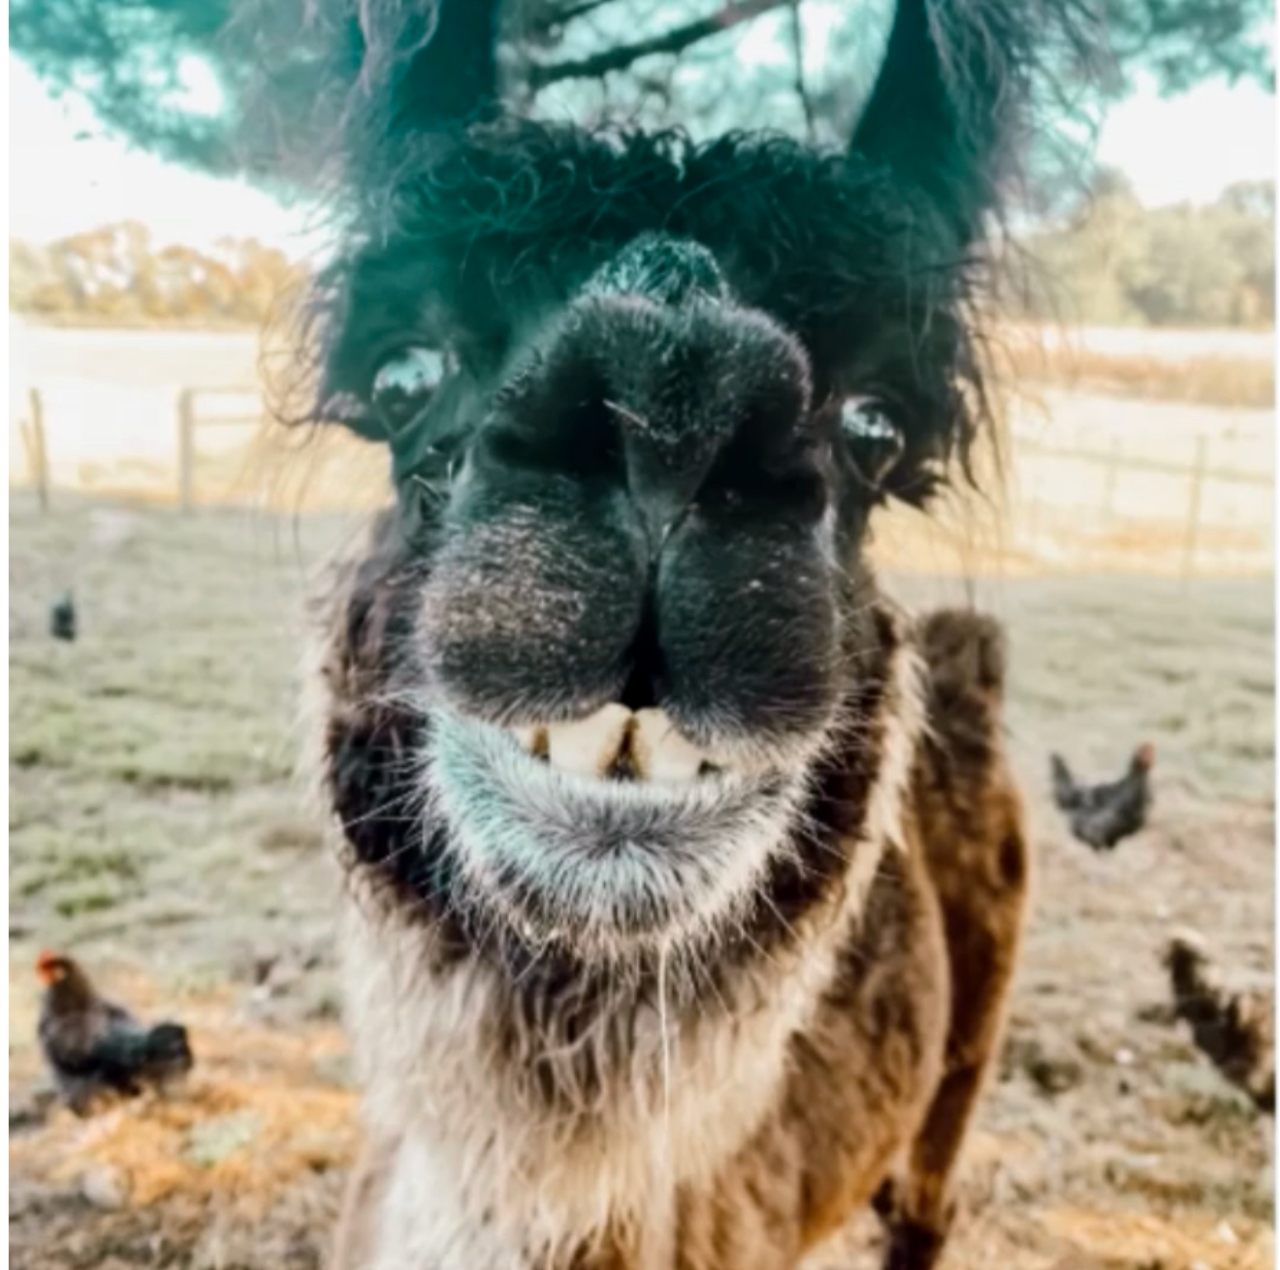 Image of a llama smiling.